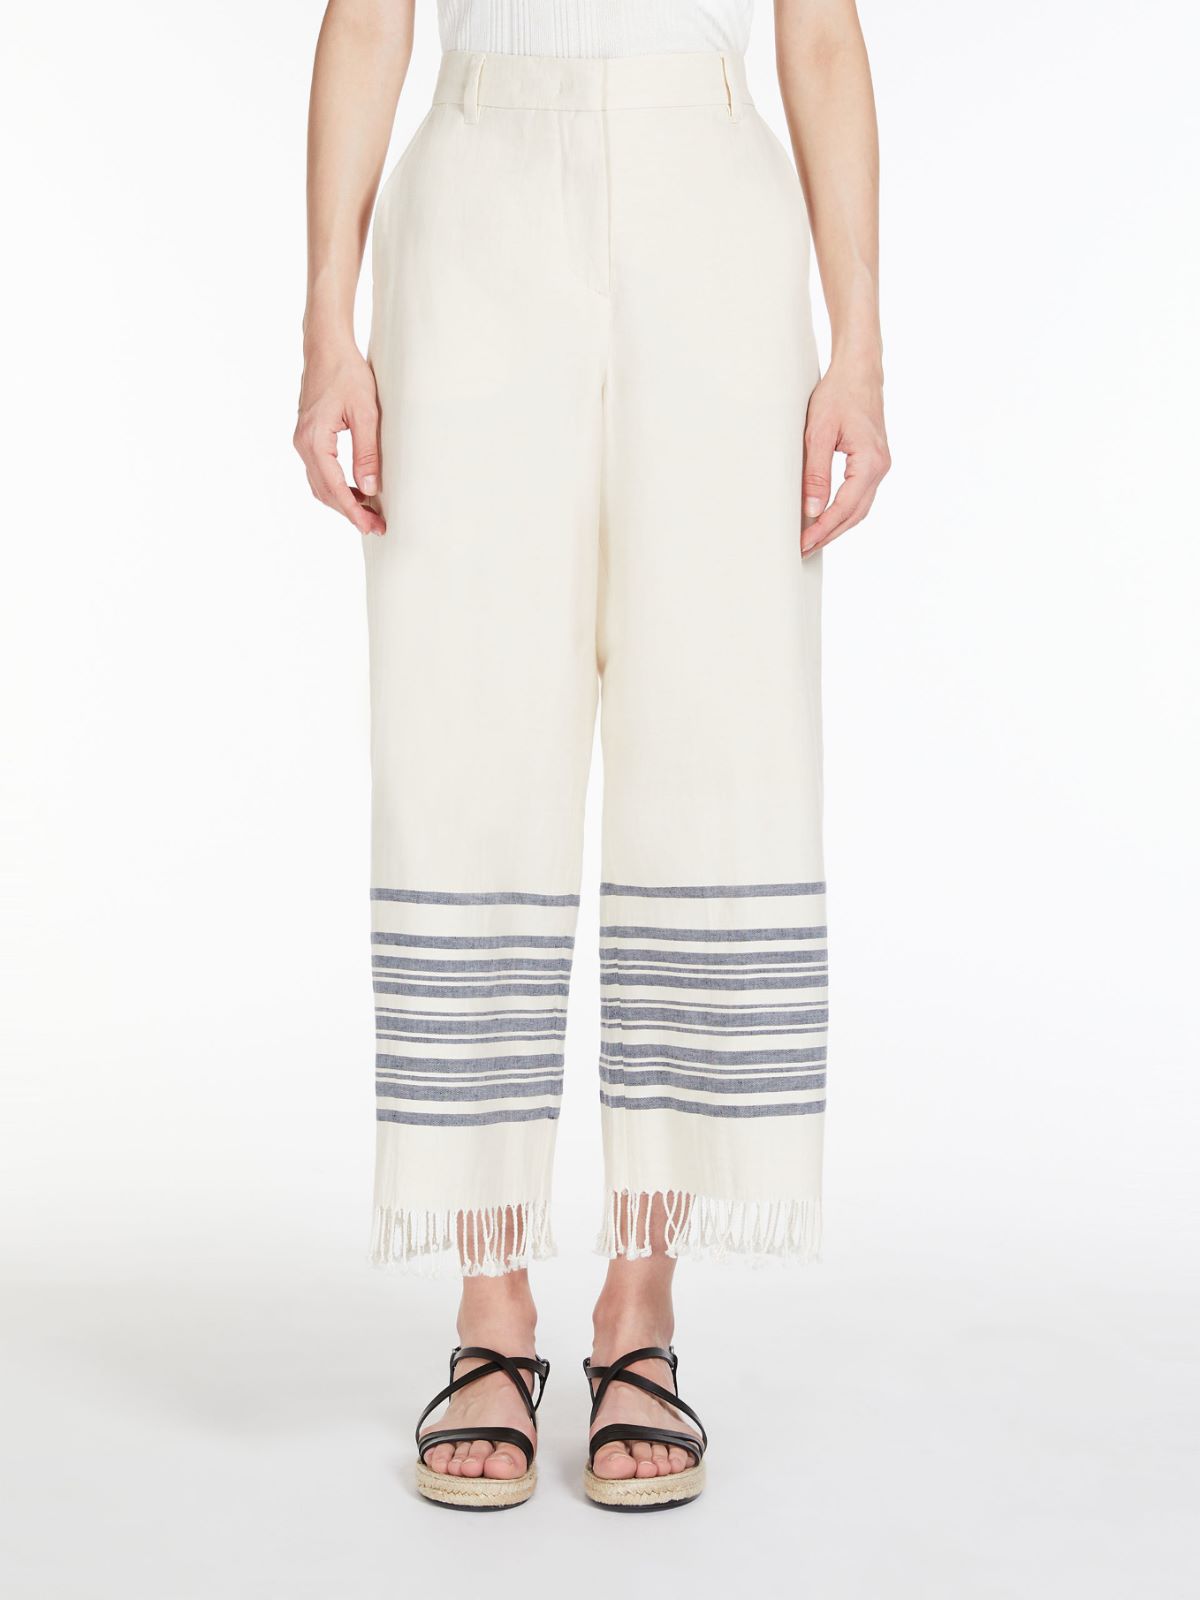 Linen and cotton trousers - ECRU - Weekend Max Mara - 2